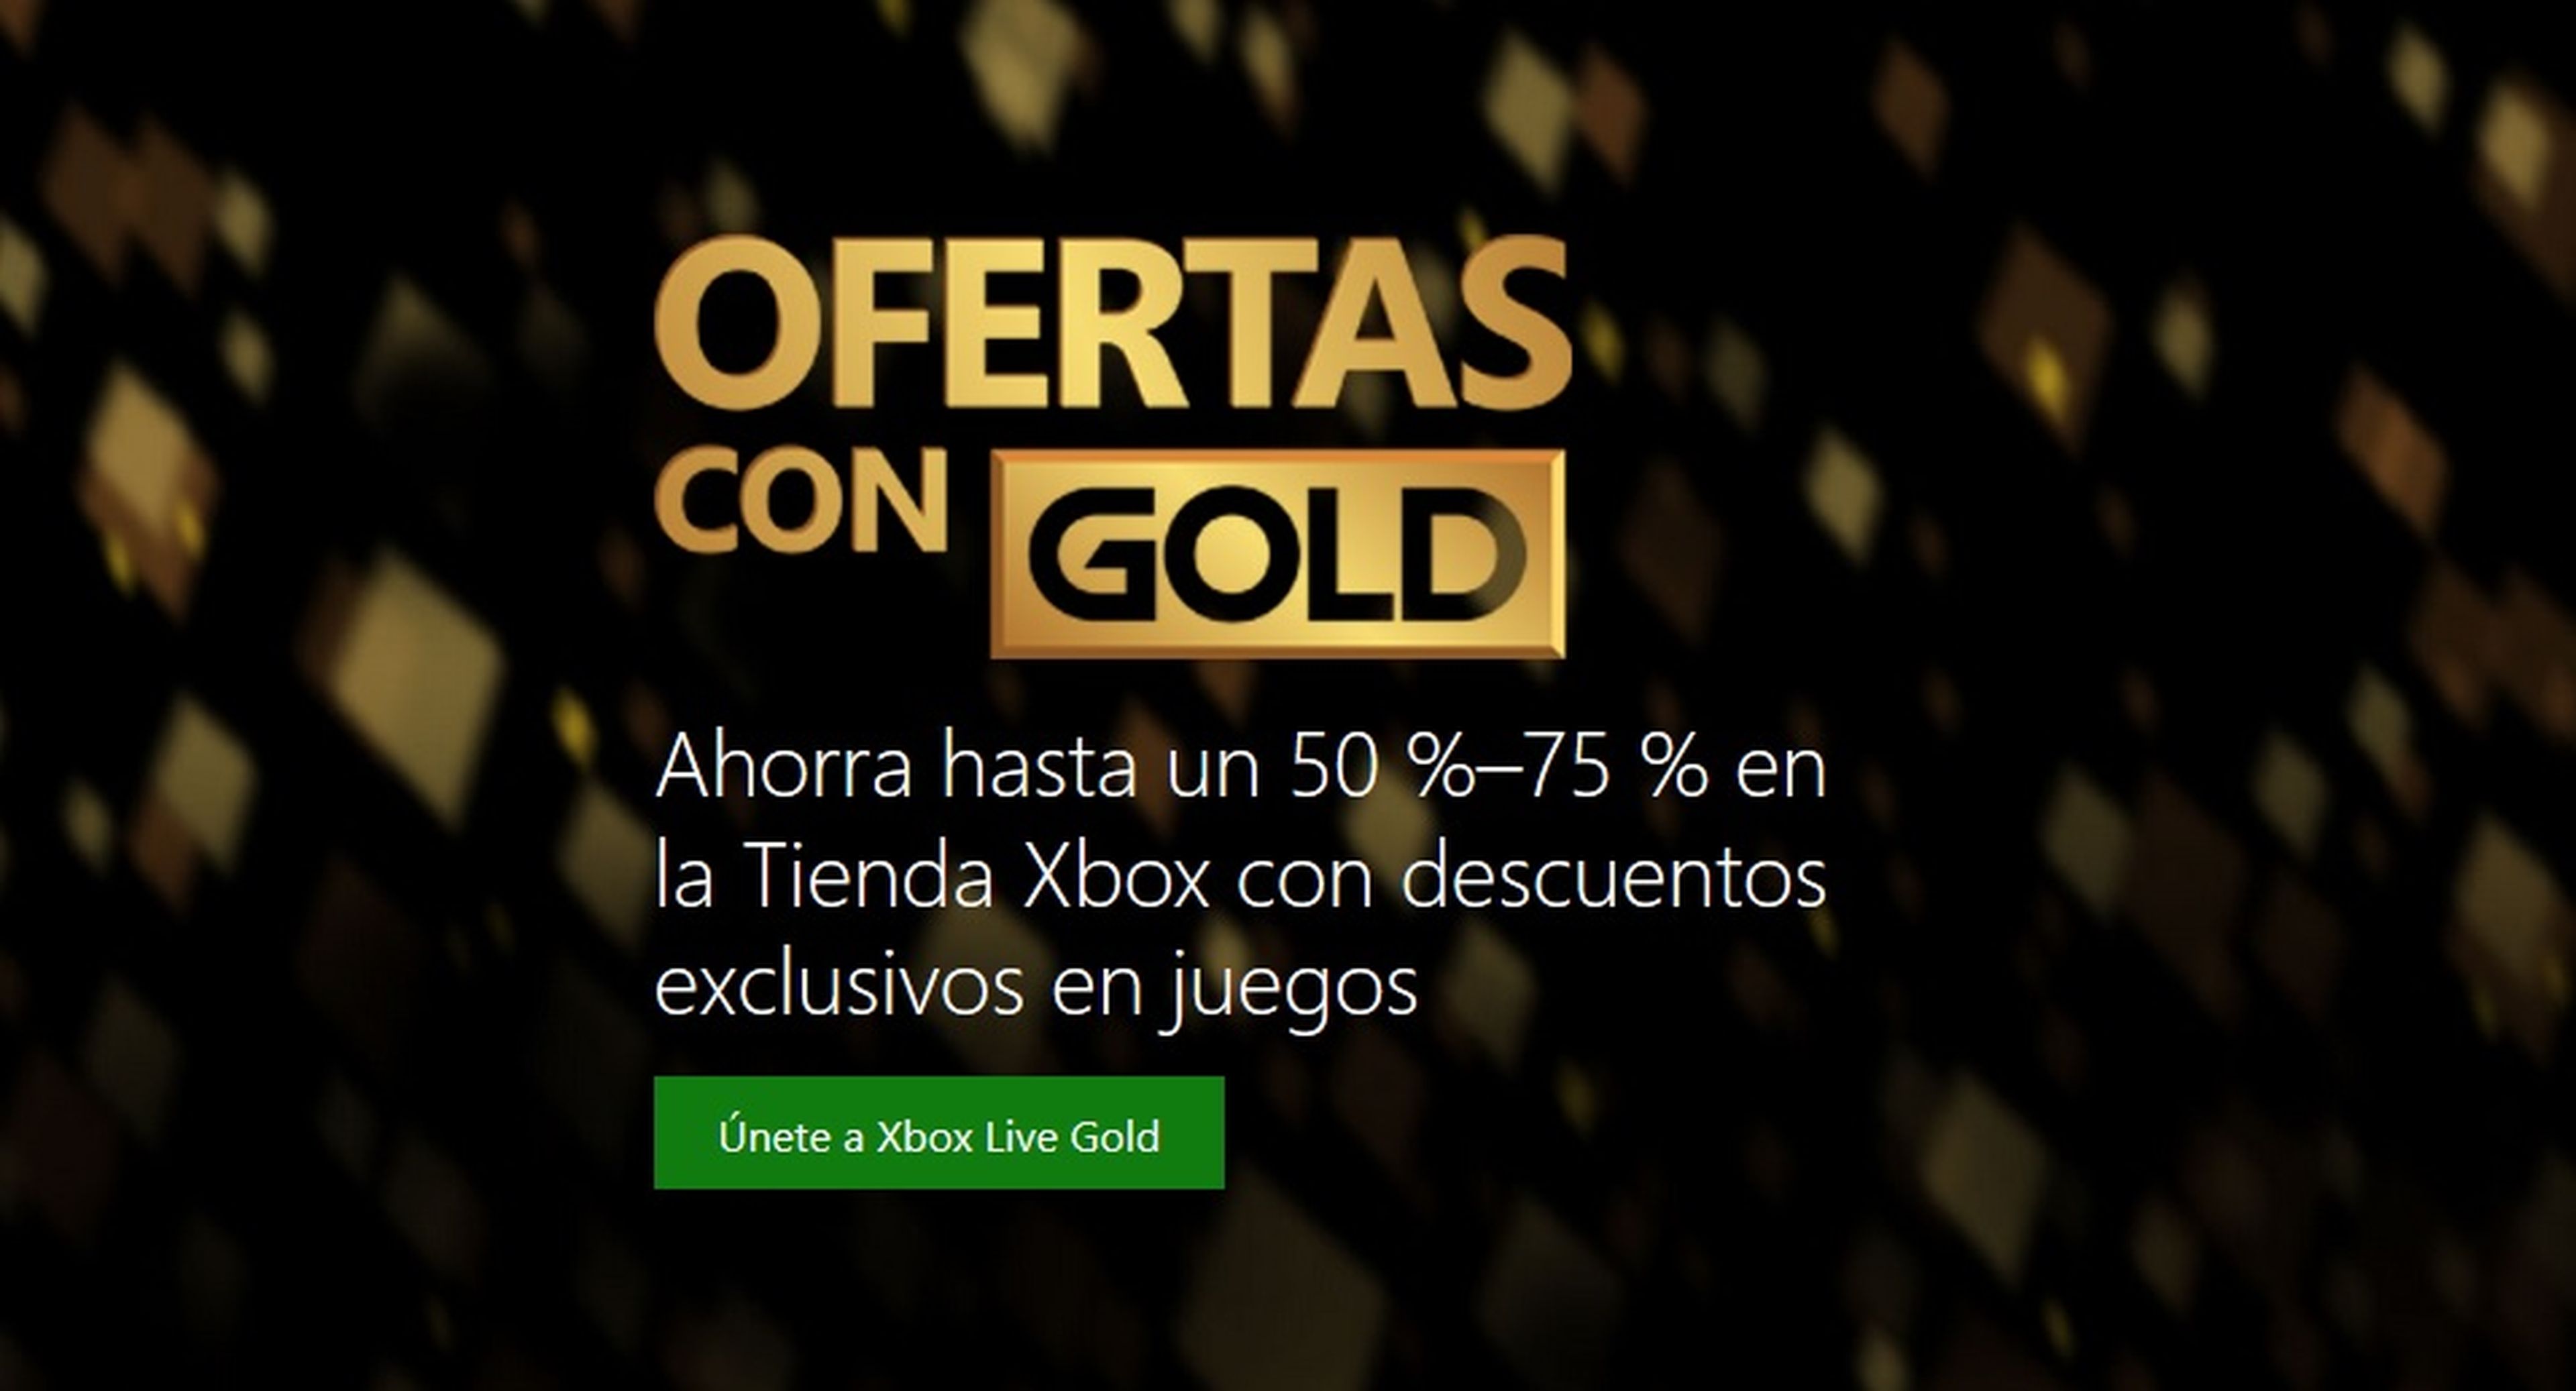 Xbox Live Gold - Ofertas con Gold